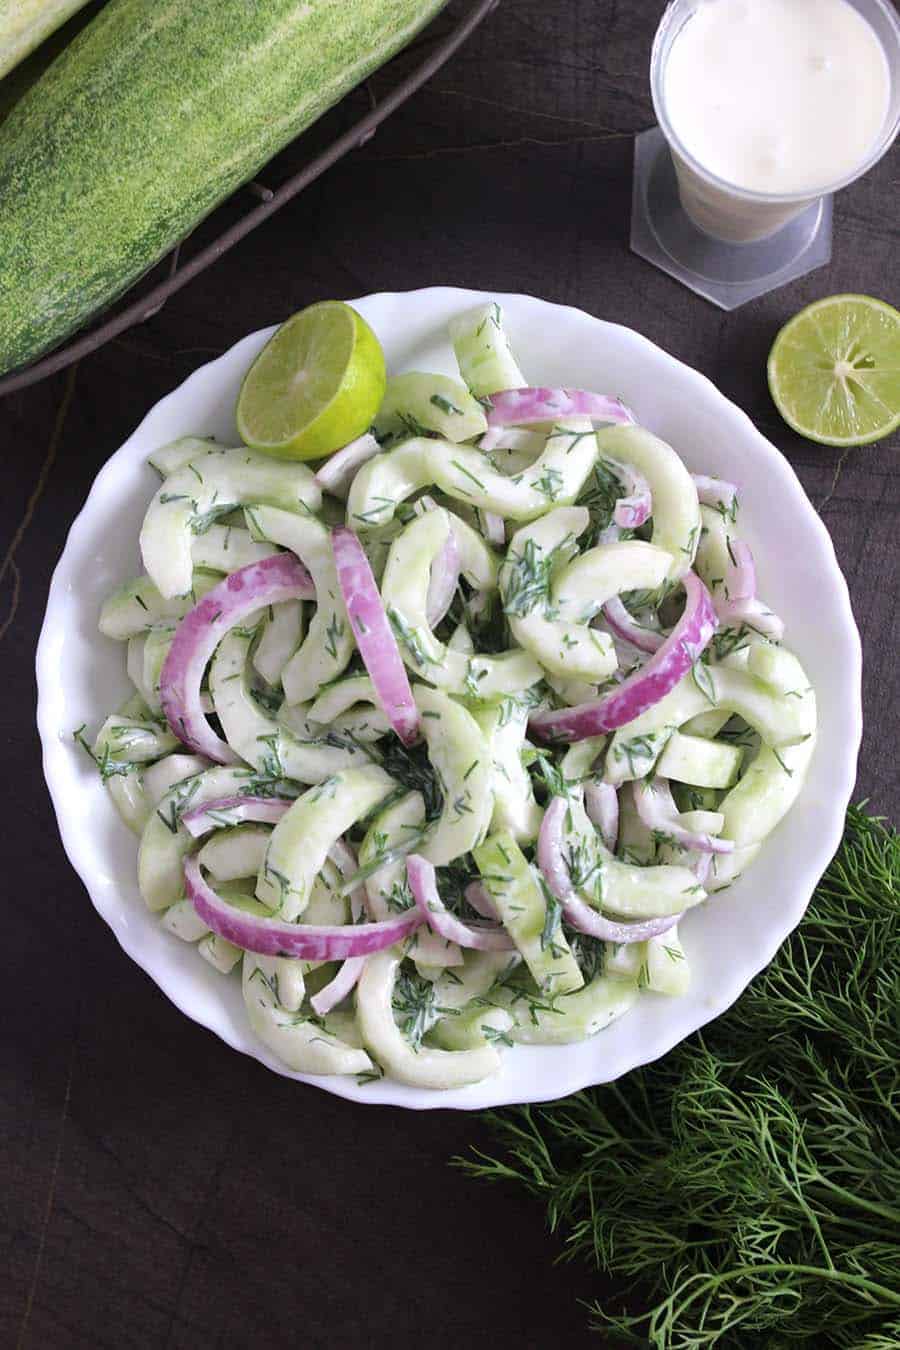 Best & Easy, Healthy & SImple, Creamy Dill Cucumber Salad, German Cucumber Salad, Gurkensalat, Yogurt or sour cream salad dressing, side dishes for lunch and dinner #salad #saladrecipes #saladdressing #healthysalad #summersalad #bbqrecipes #Potluck #Picnic #ketocucumbersalad #kakdi